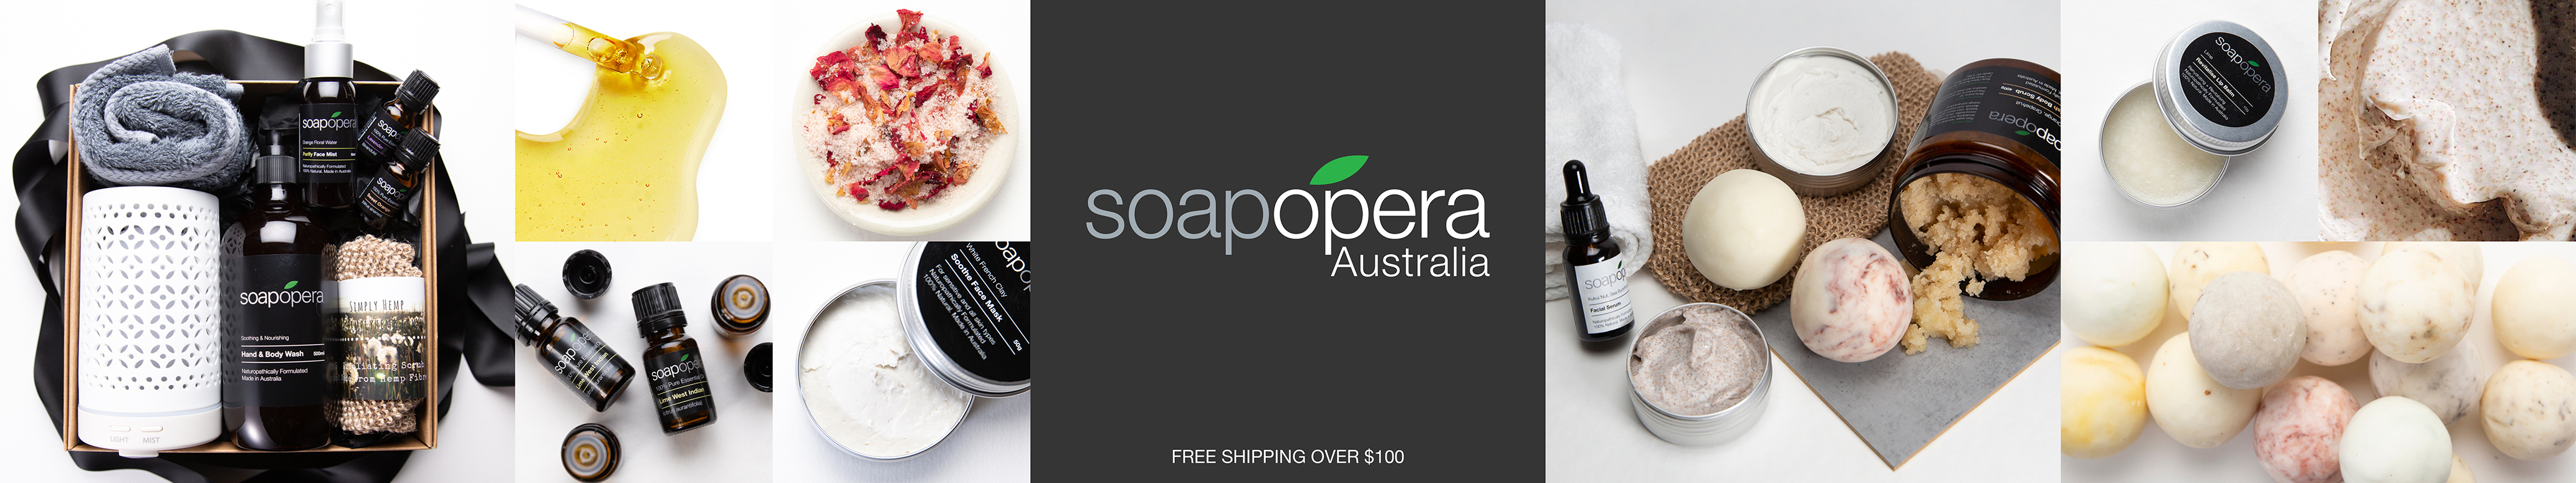 loova  The Soap Opera Company